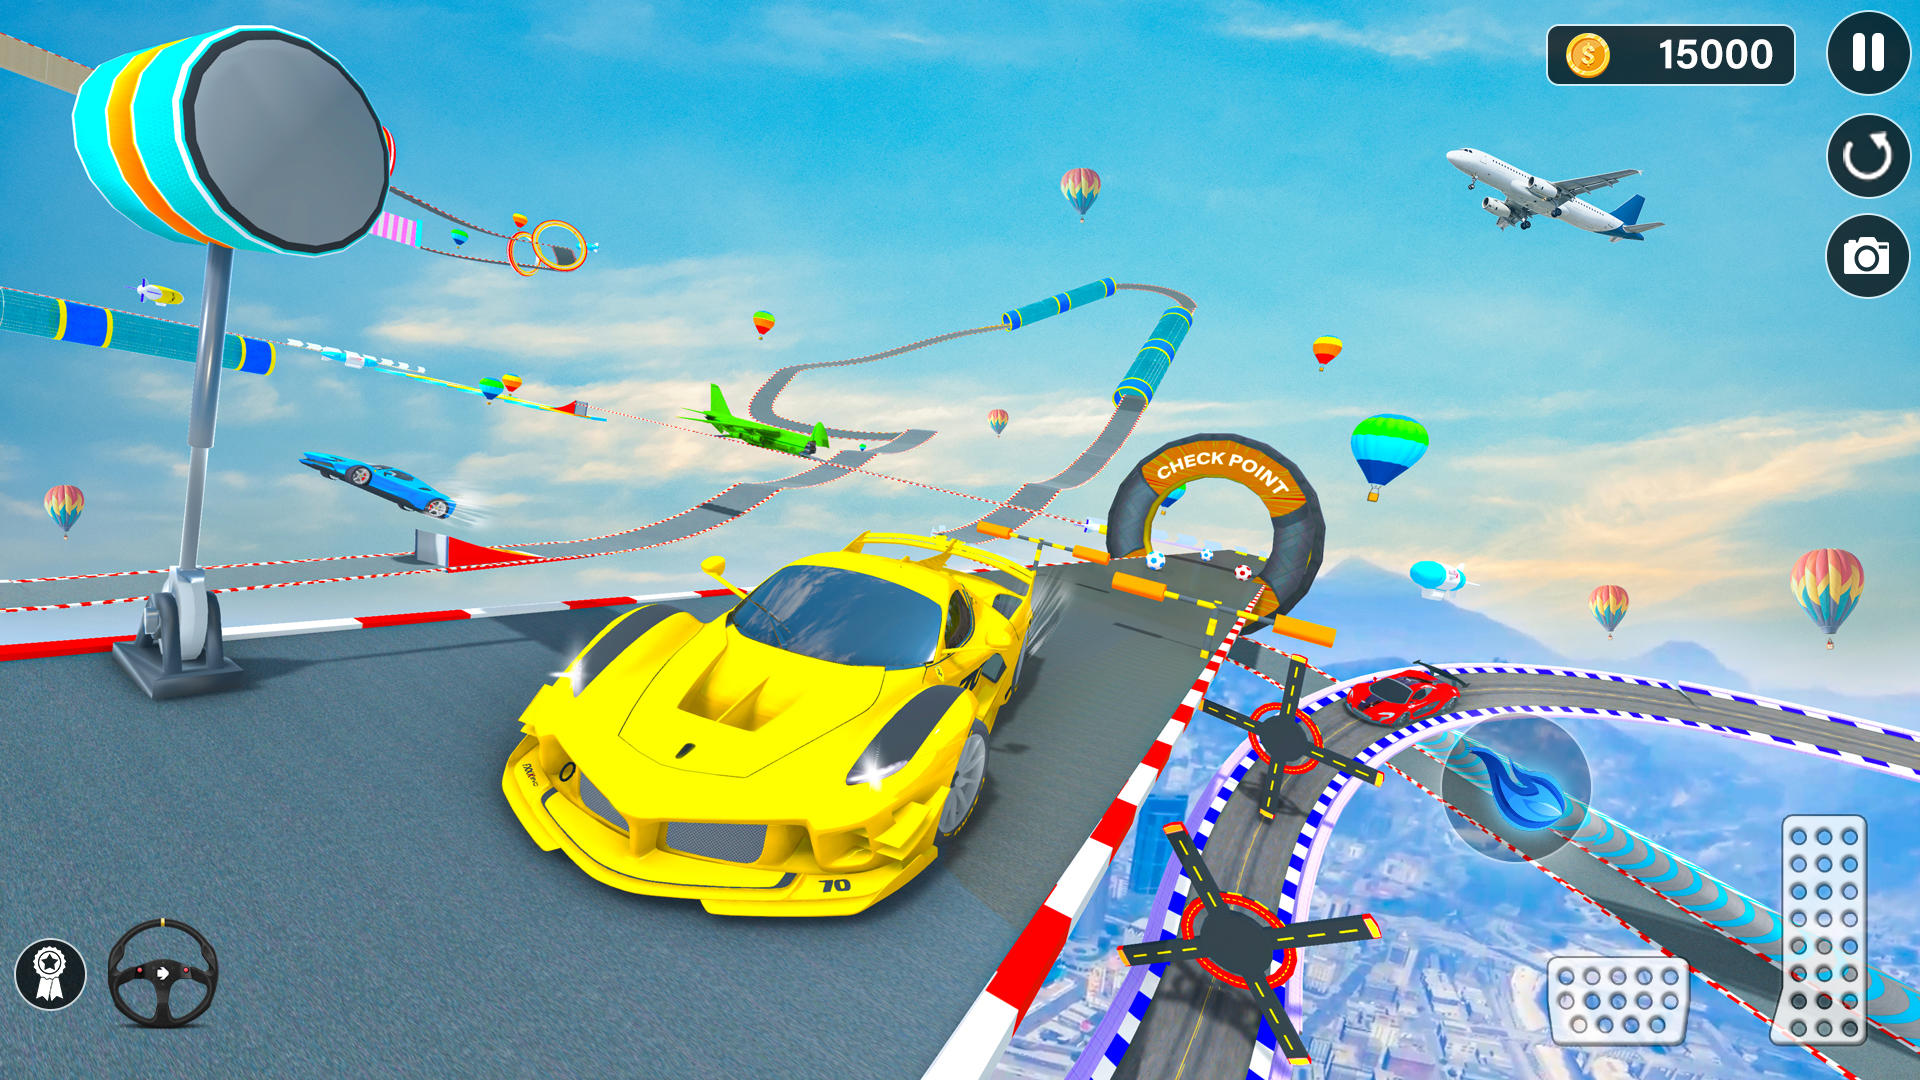 Crazy Car Stunt 3D Mega Ramp android iOS apk download for free-TapTap